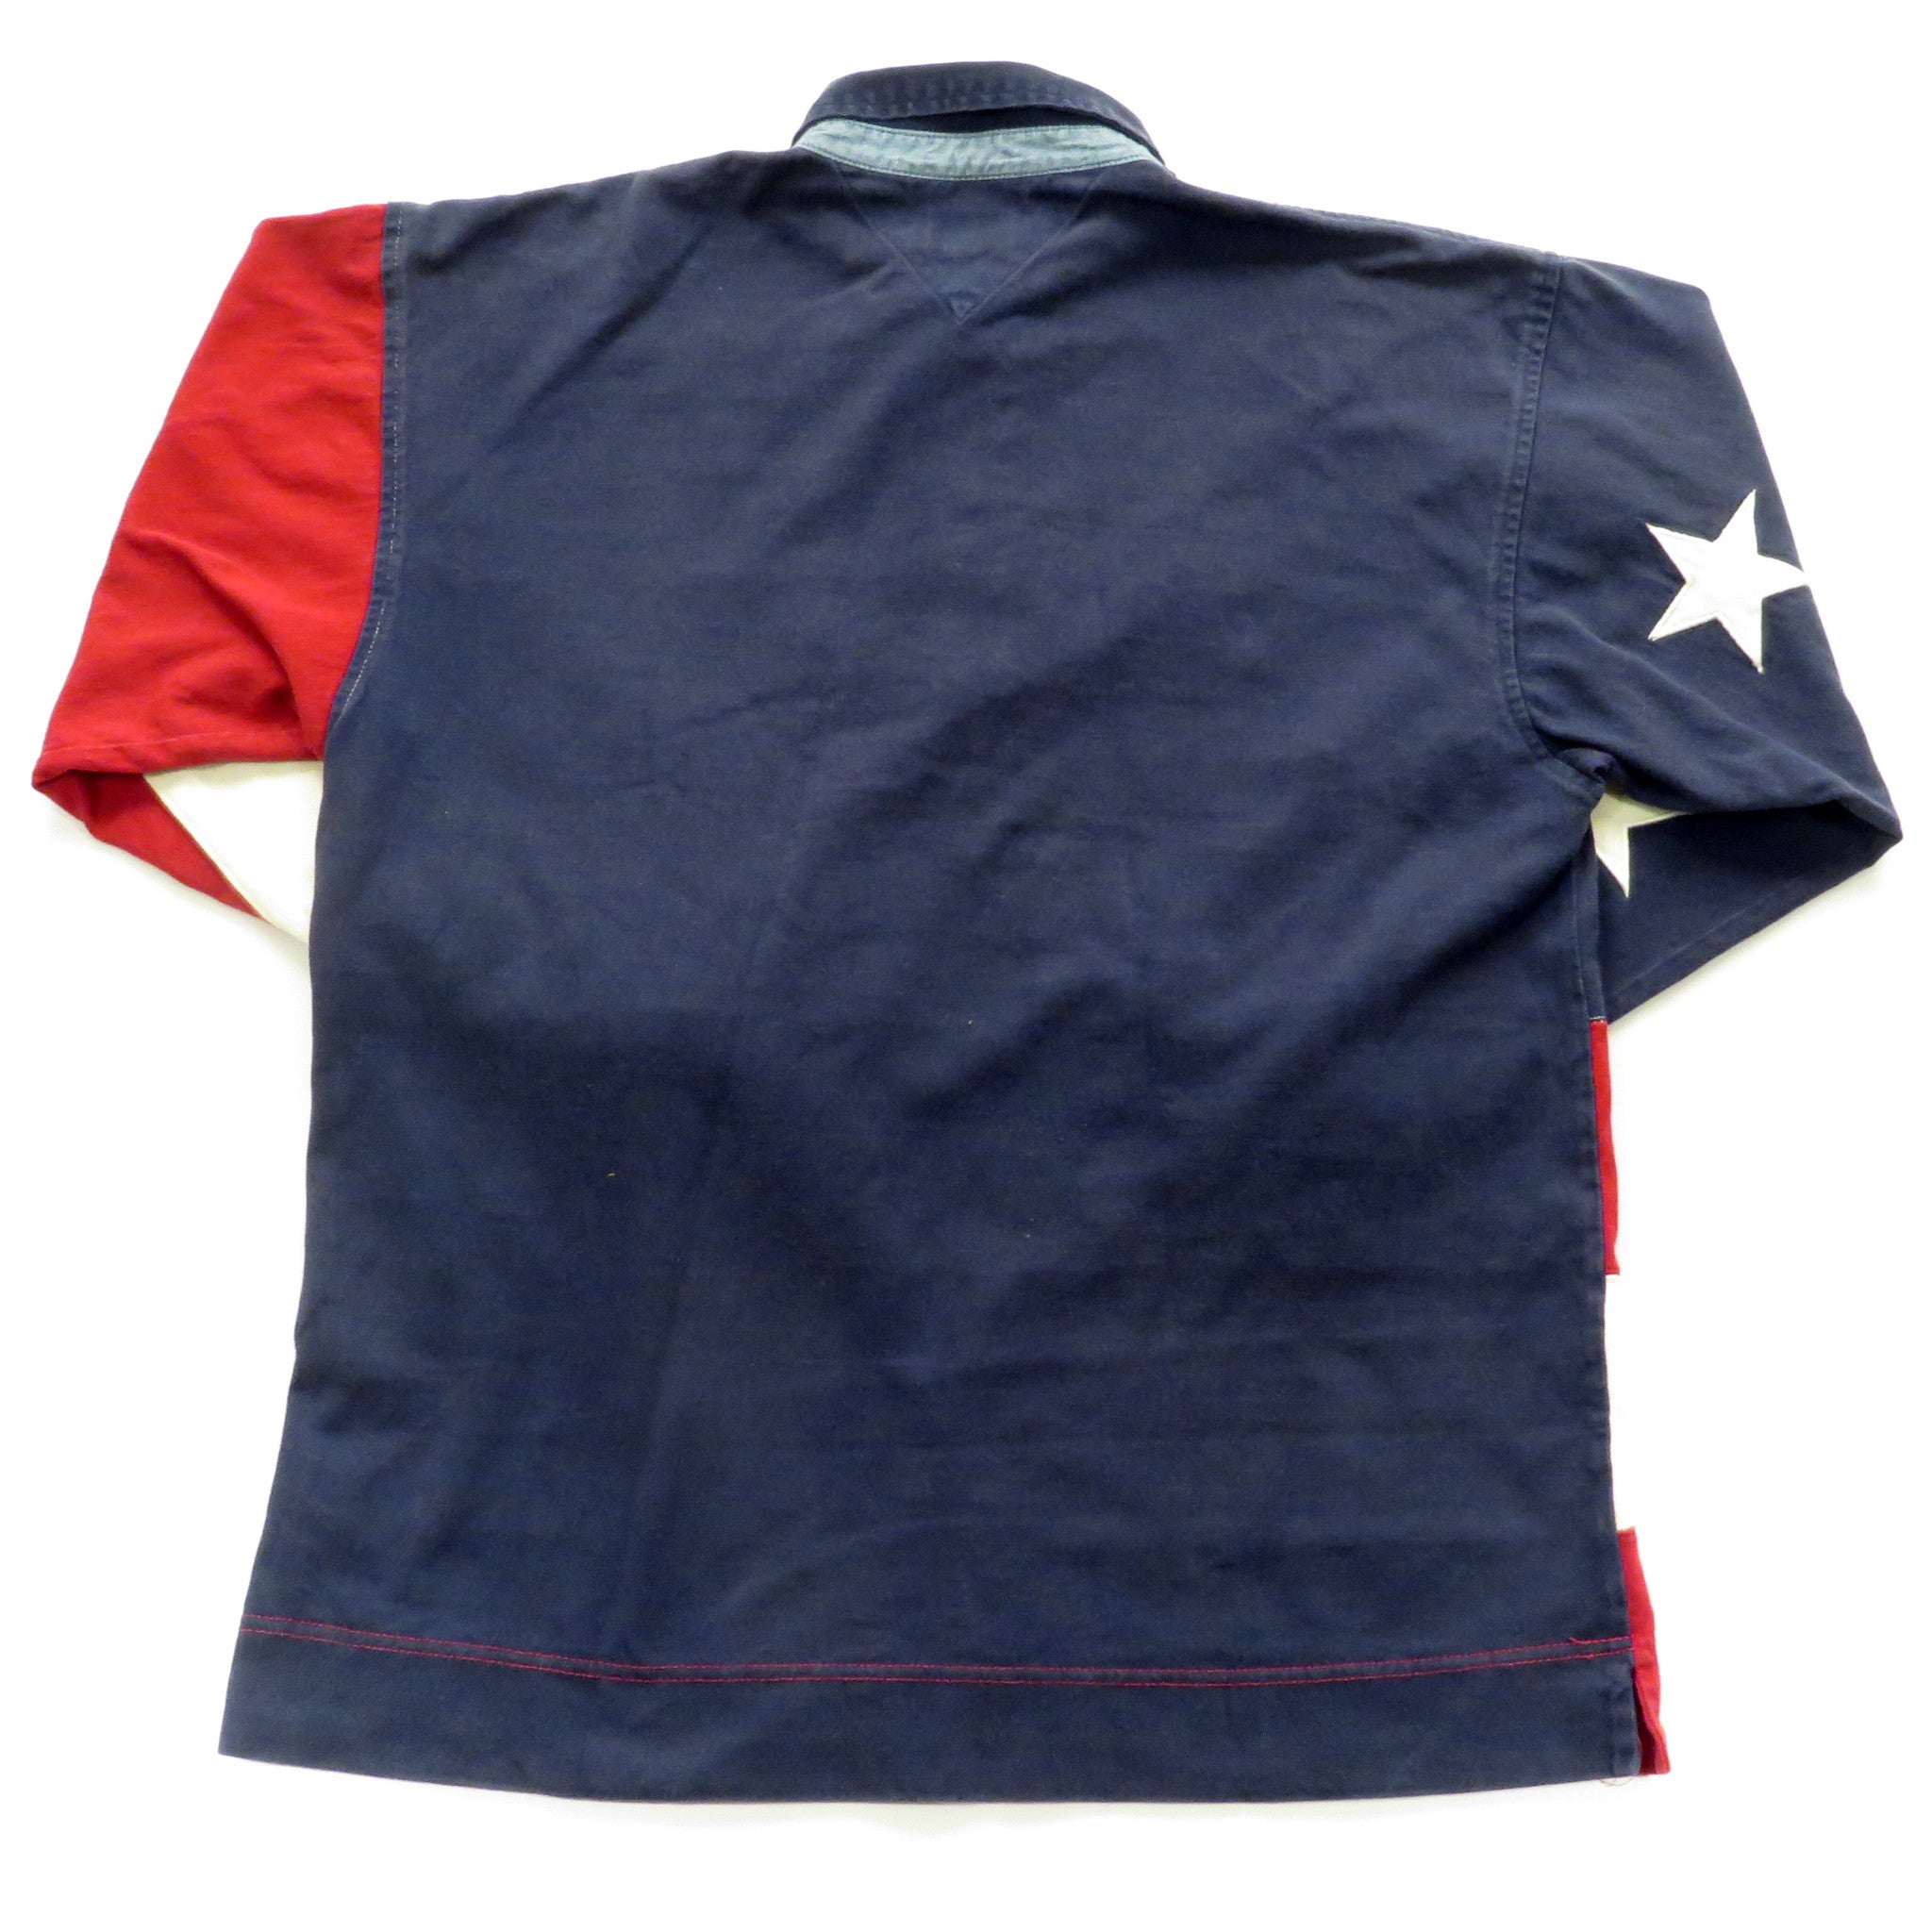 Tommy Hilfiger Big Flag Print Long Sleeve Shirt Sz M